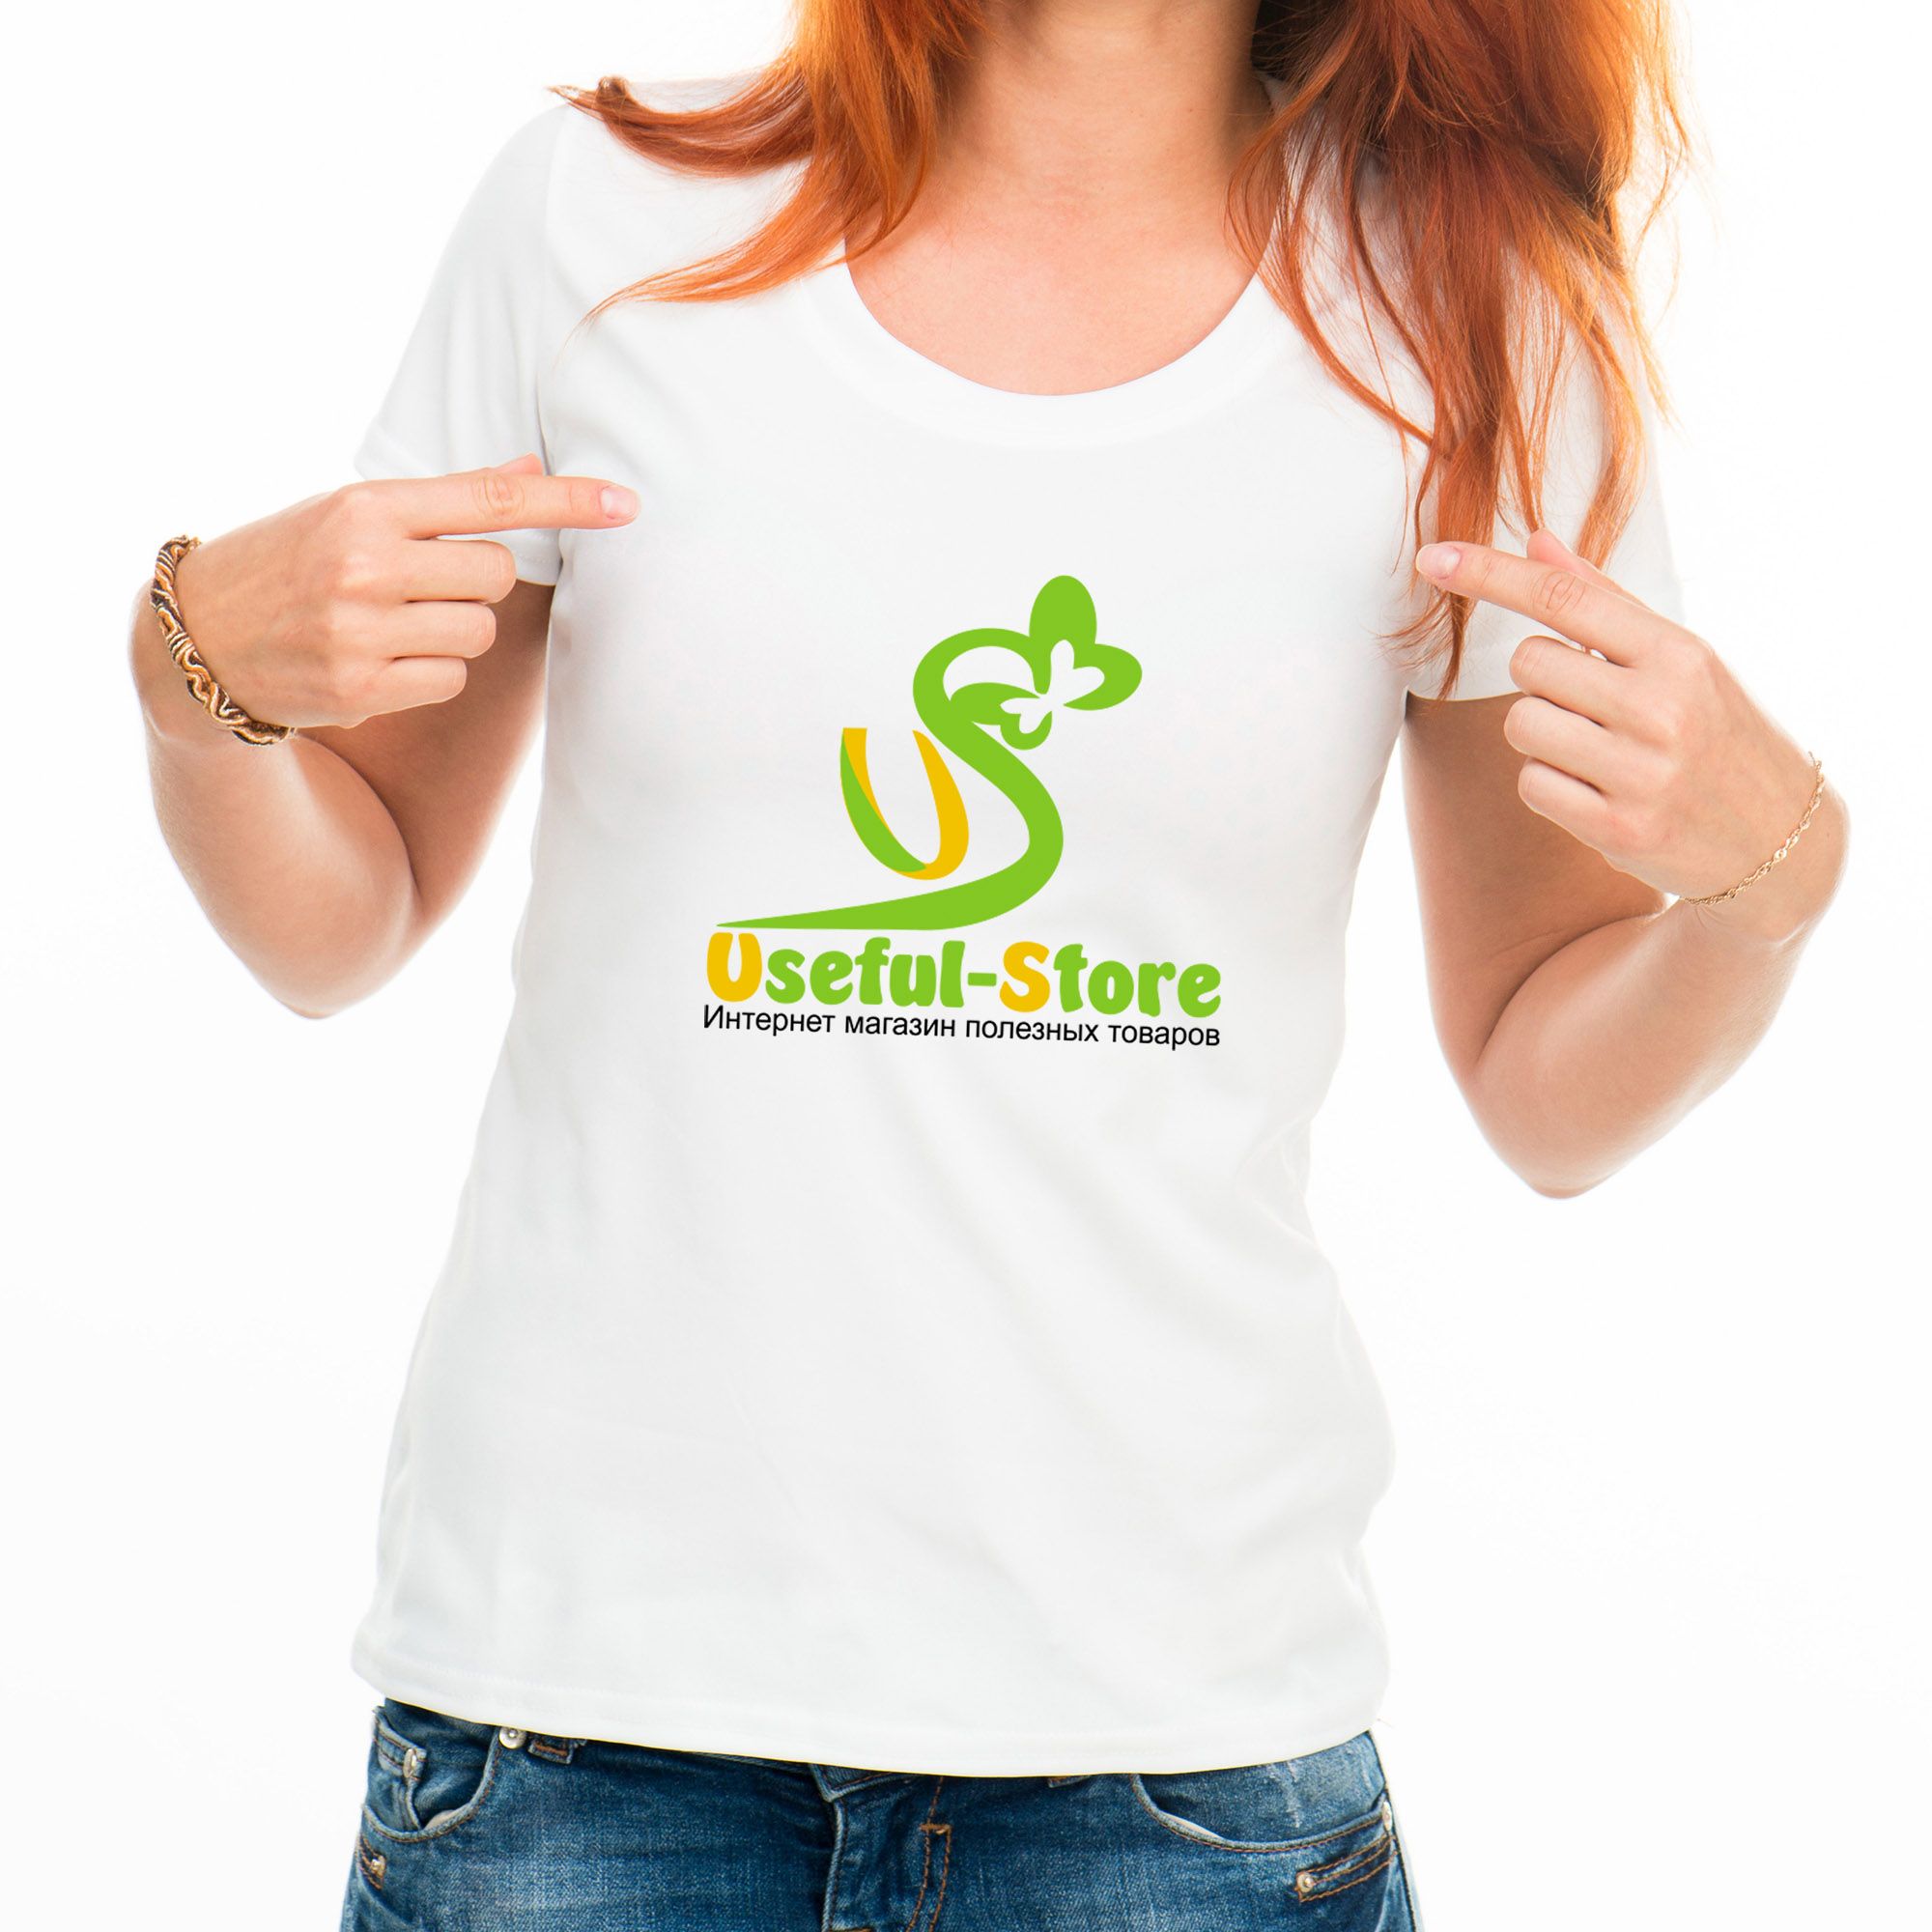 Логотип для интернет-магазина Useful-Store - дизайнер poch-home